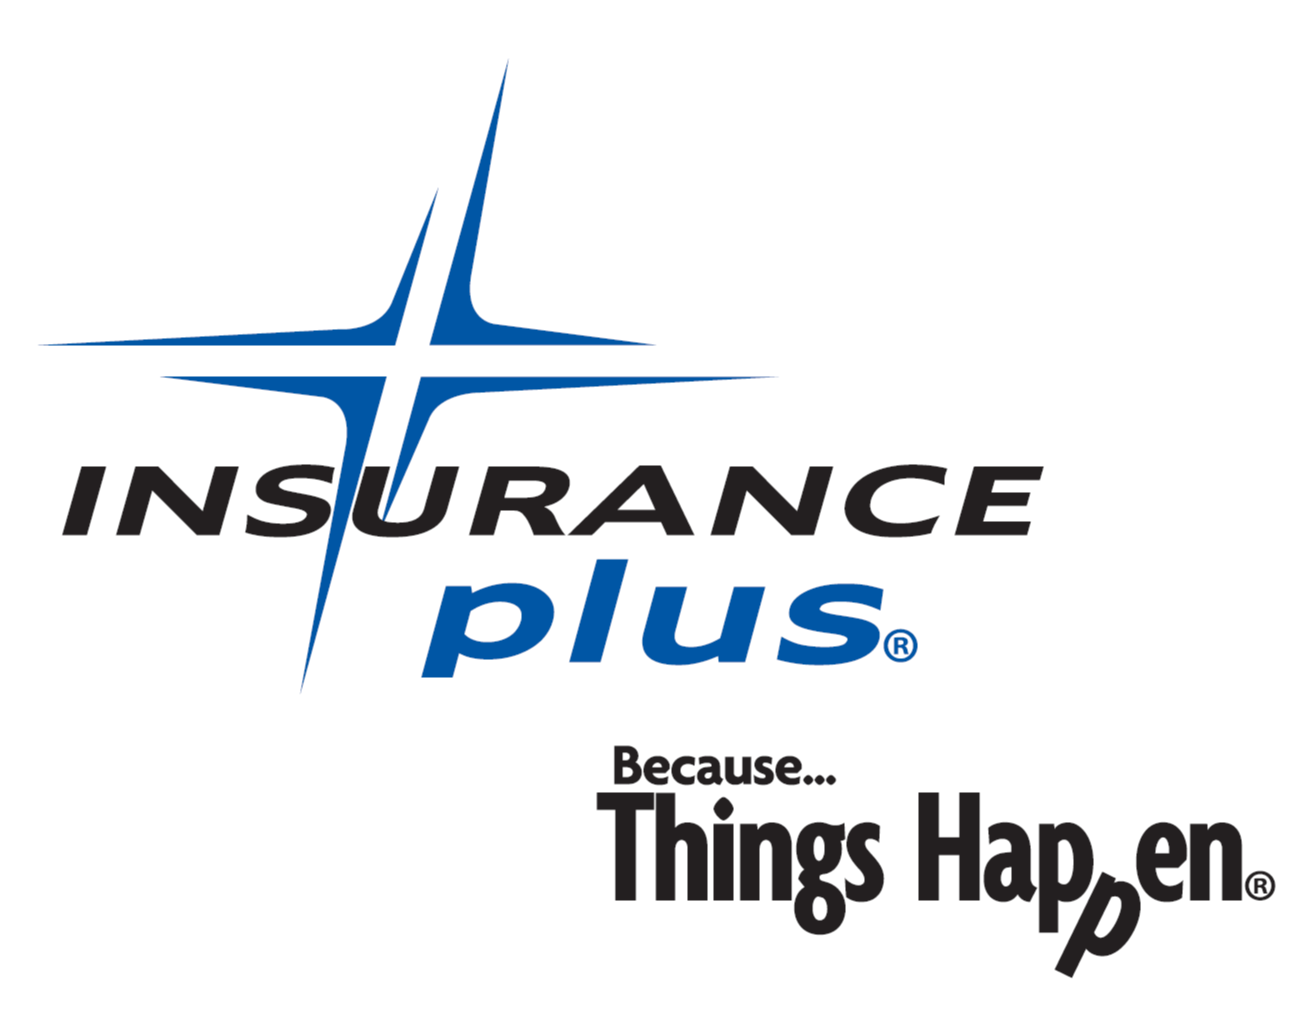 Insurance Plus